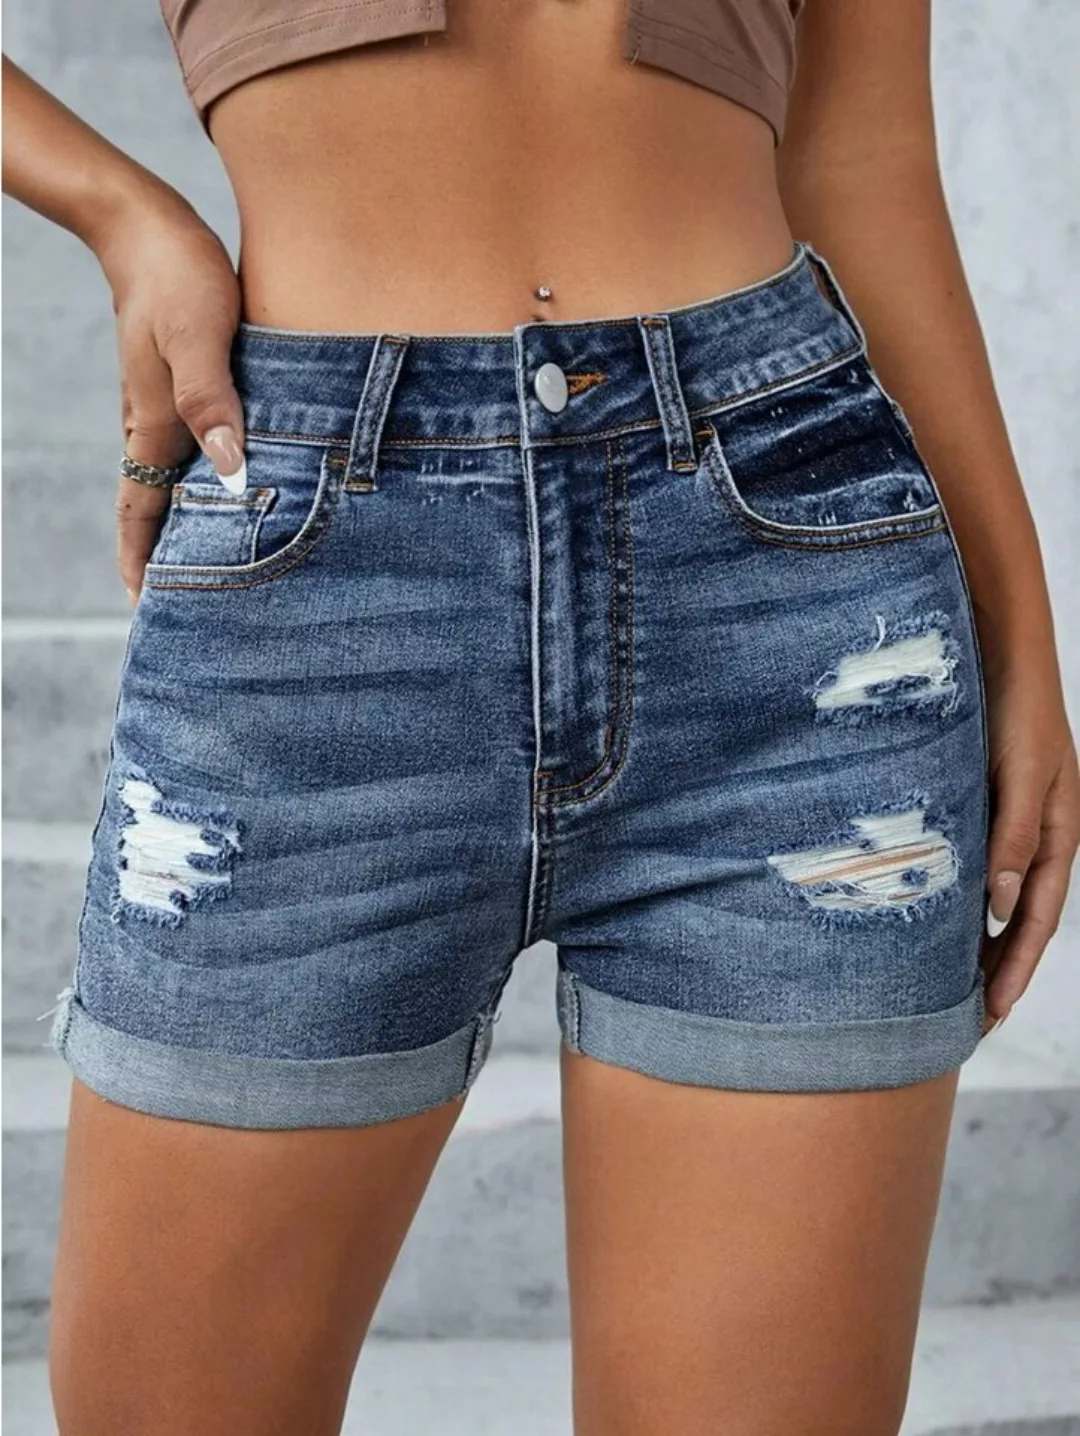 KIKI Jeansshorts Stretch Jeans - zerrissene Jeans Shorts -Relaxshorts günstig online kaufen